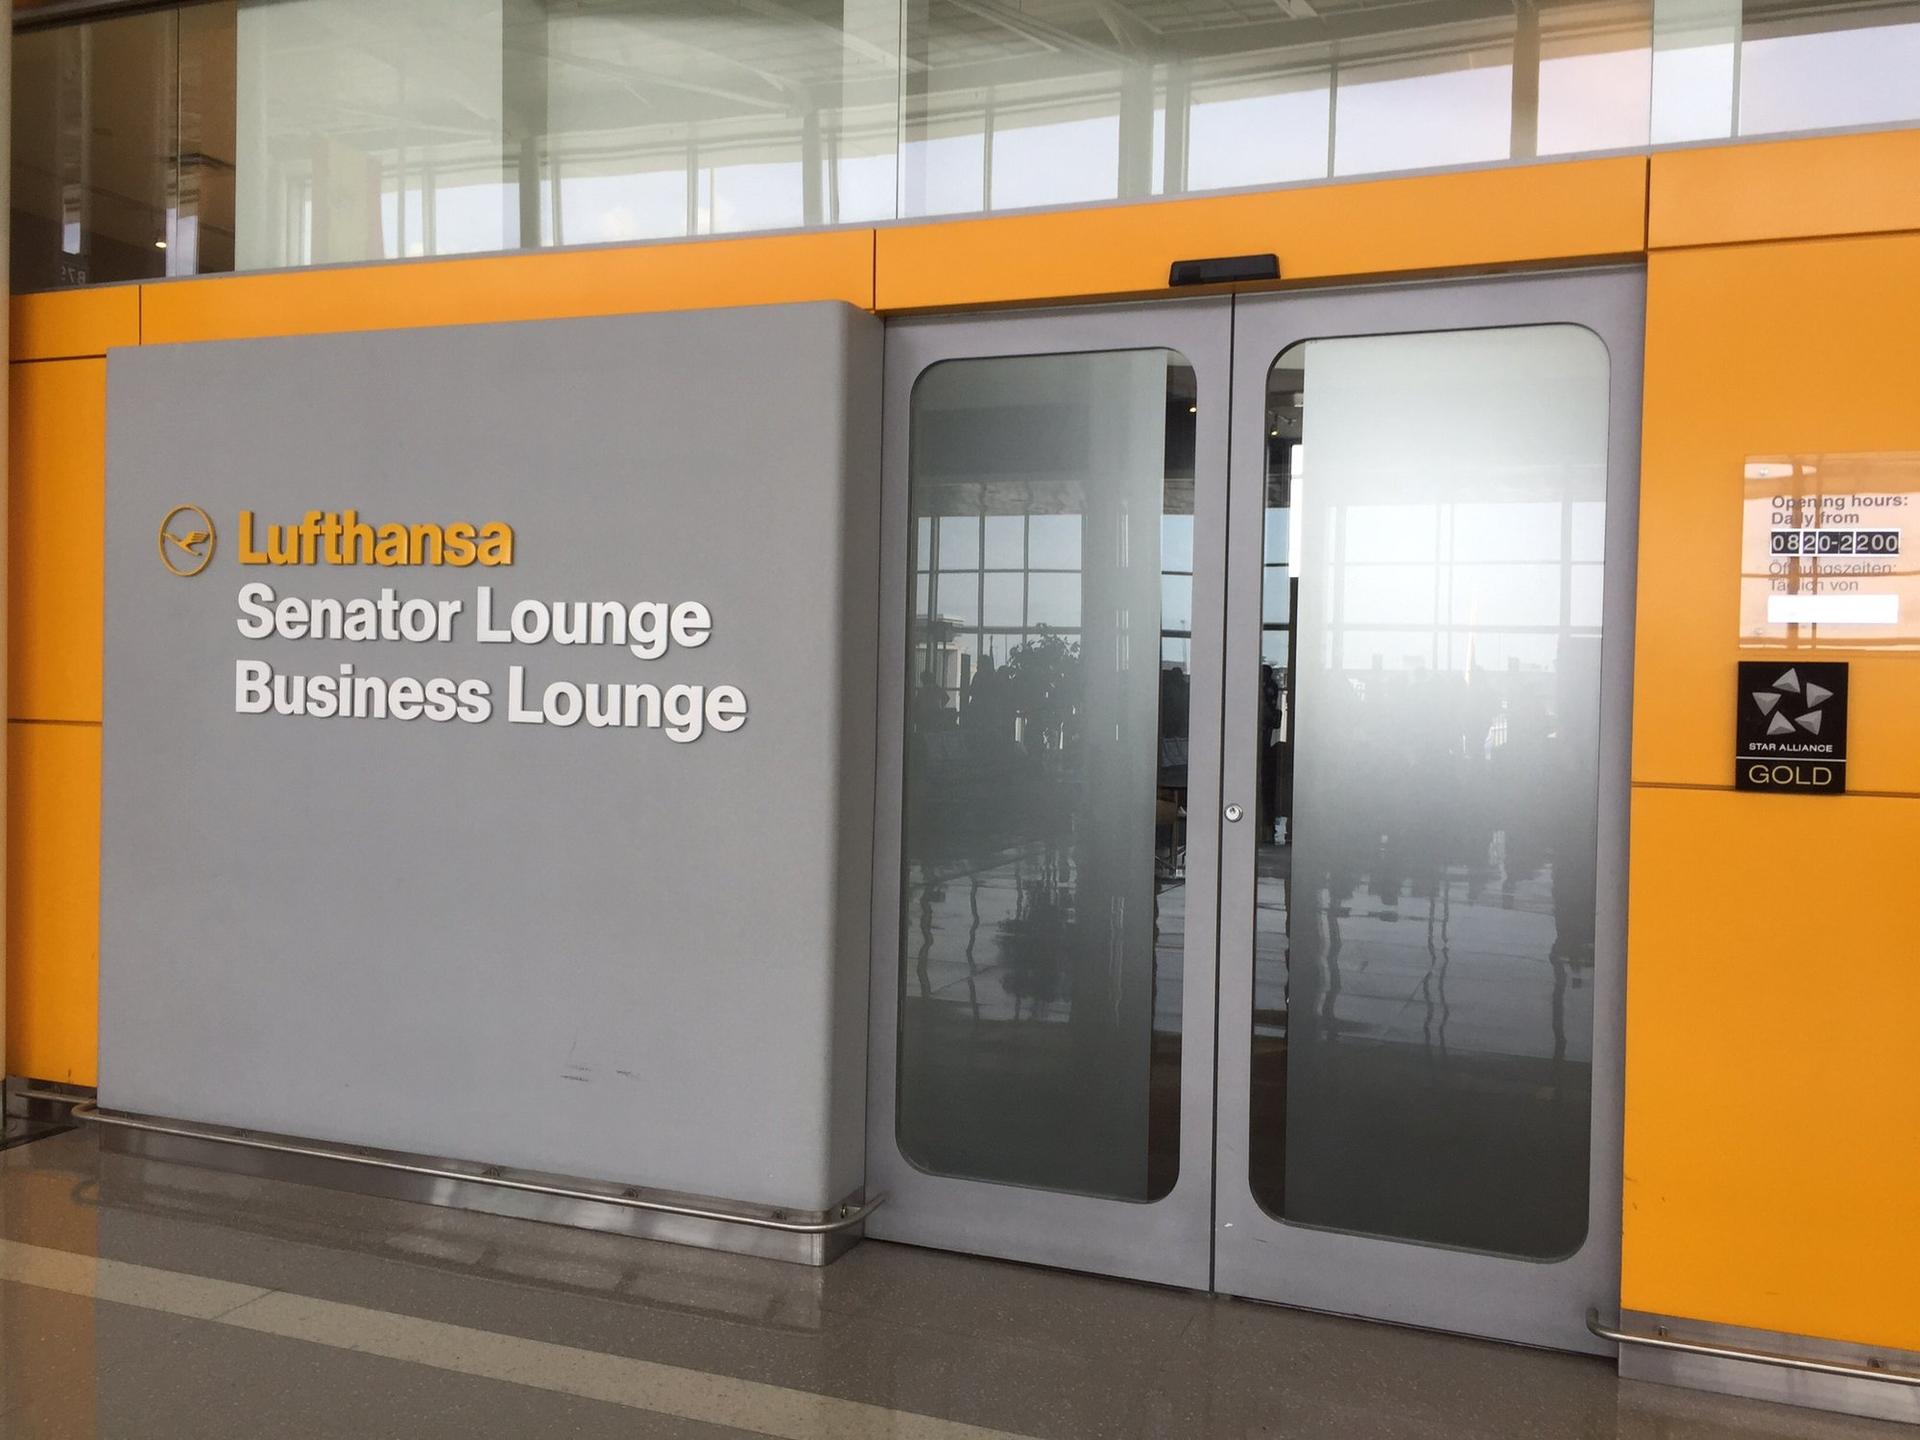 Lufthansa Business Lounge image 28 of 35